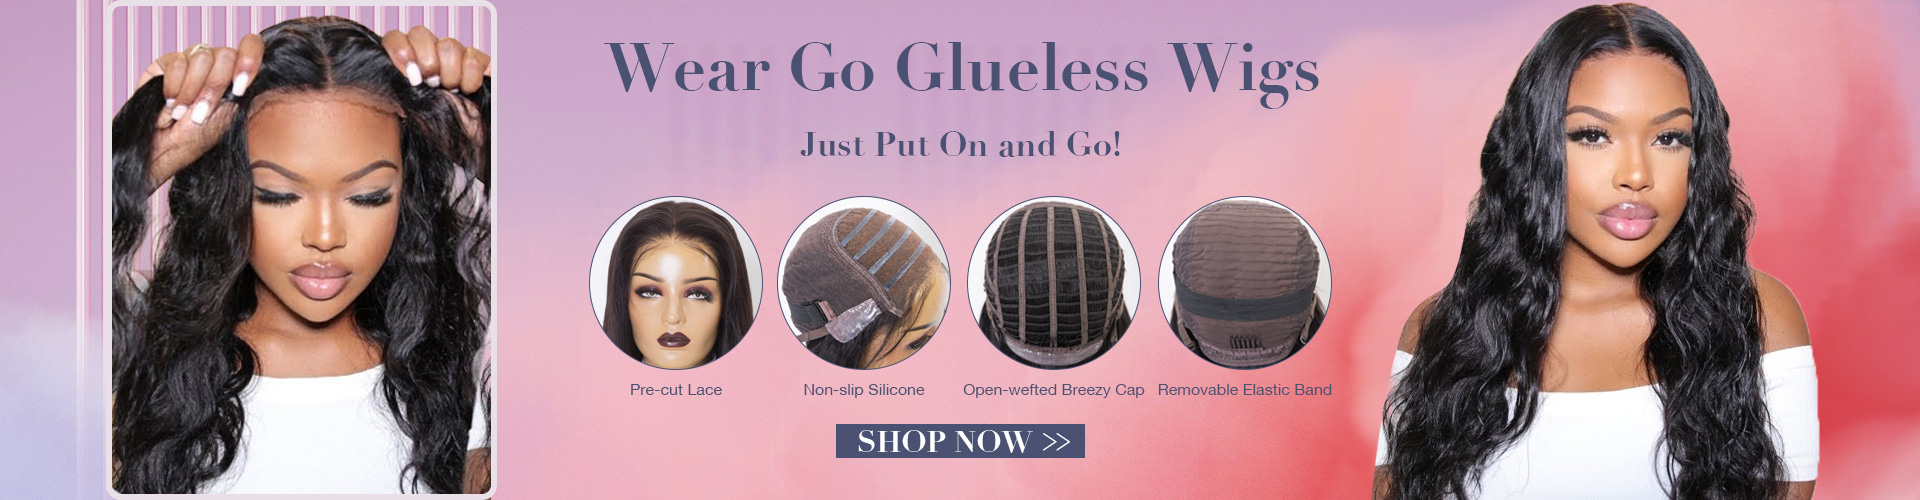 Wear Go Glueless Wigs